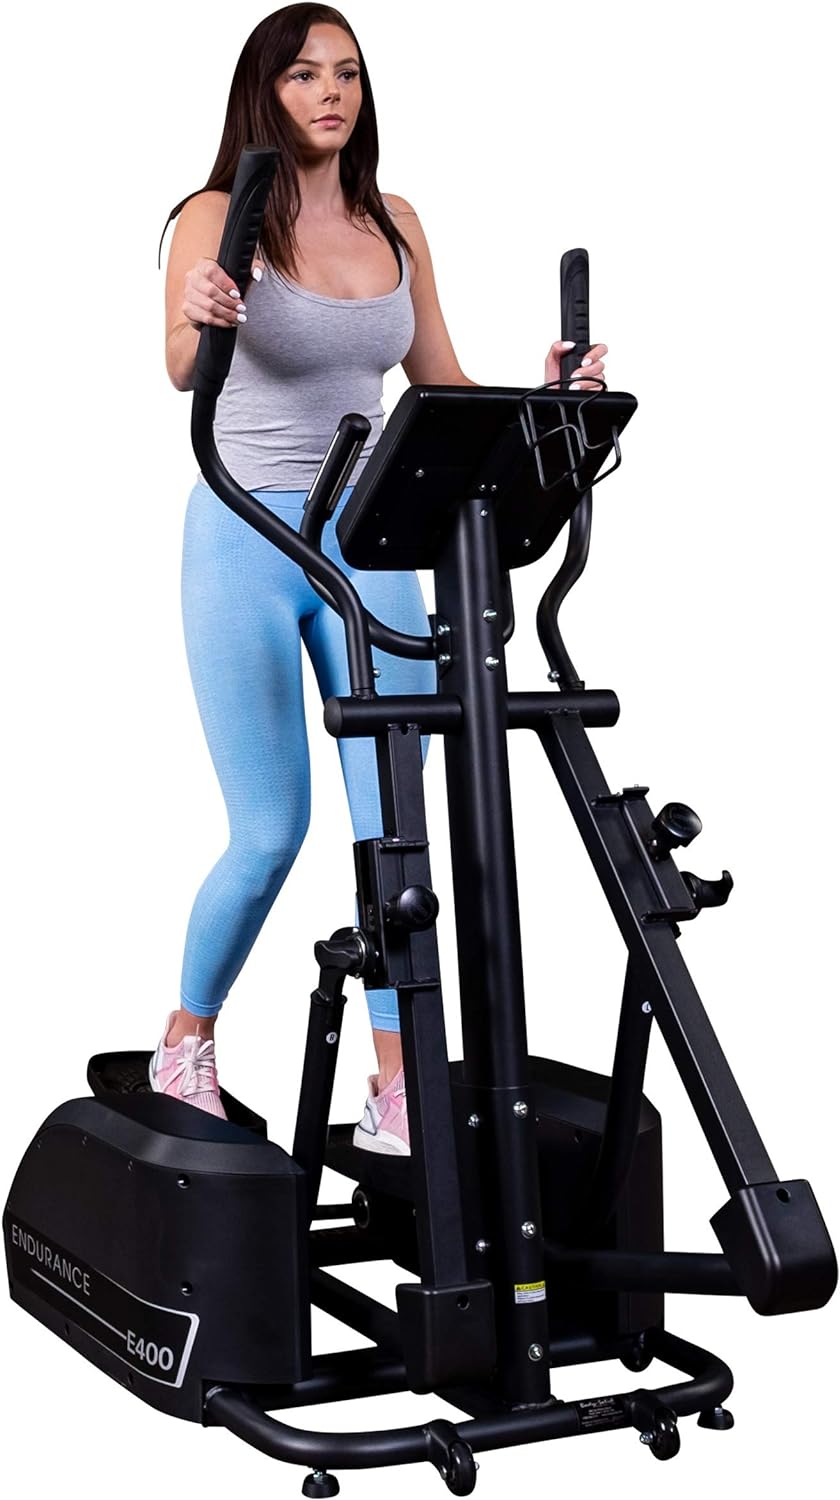 body solid e400 elliptical trainer machine review